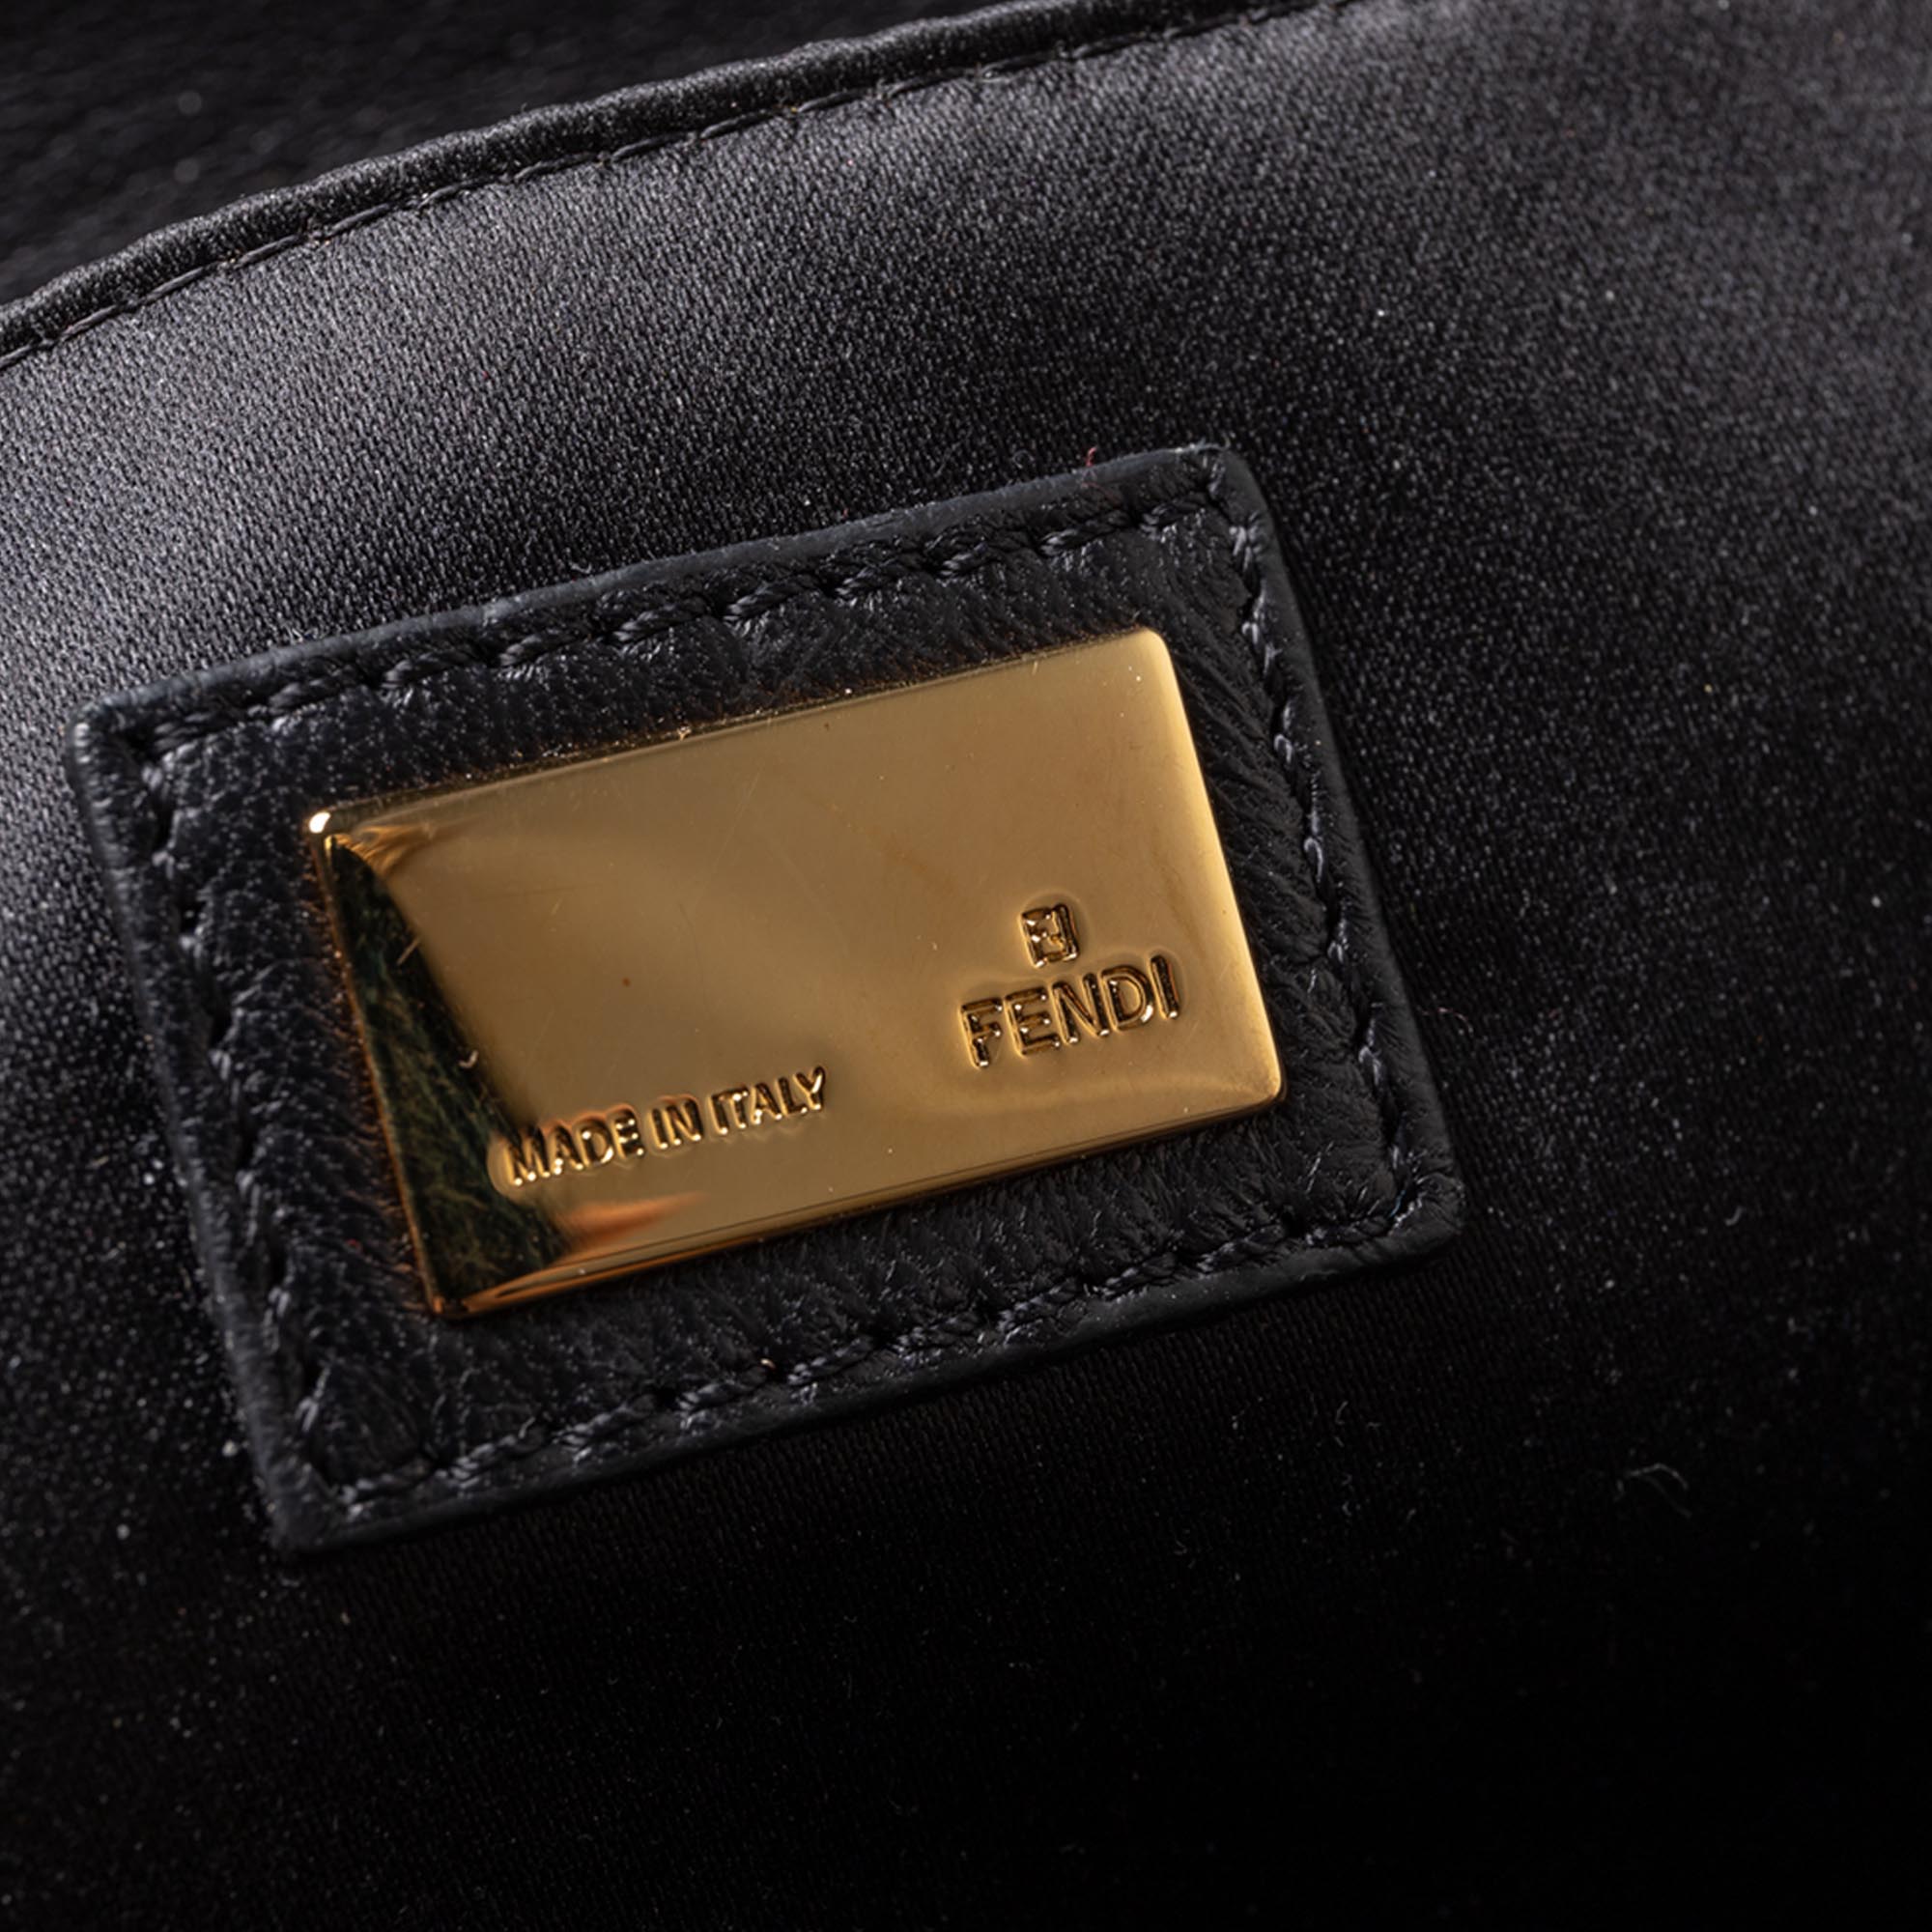 Fendi Leather Clutch Bag - Image 9 of 11